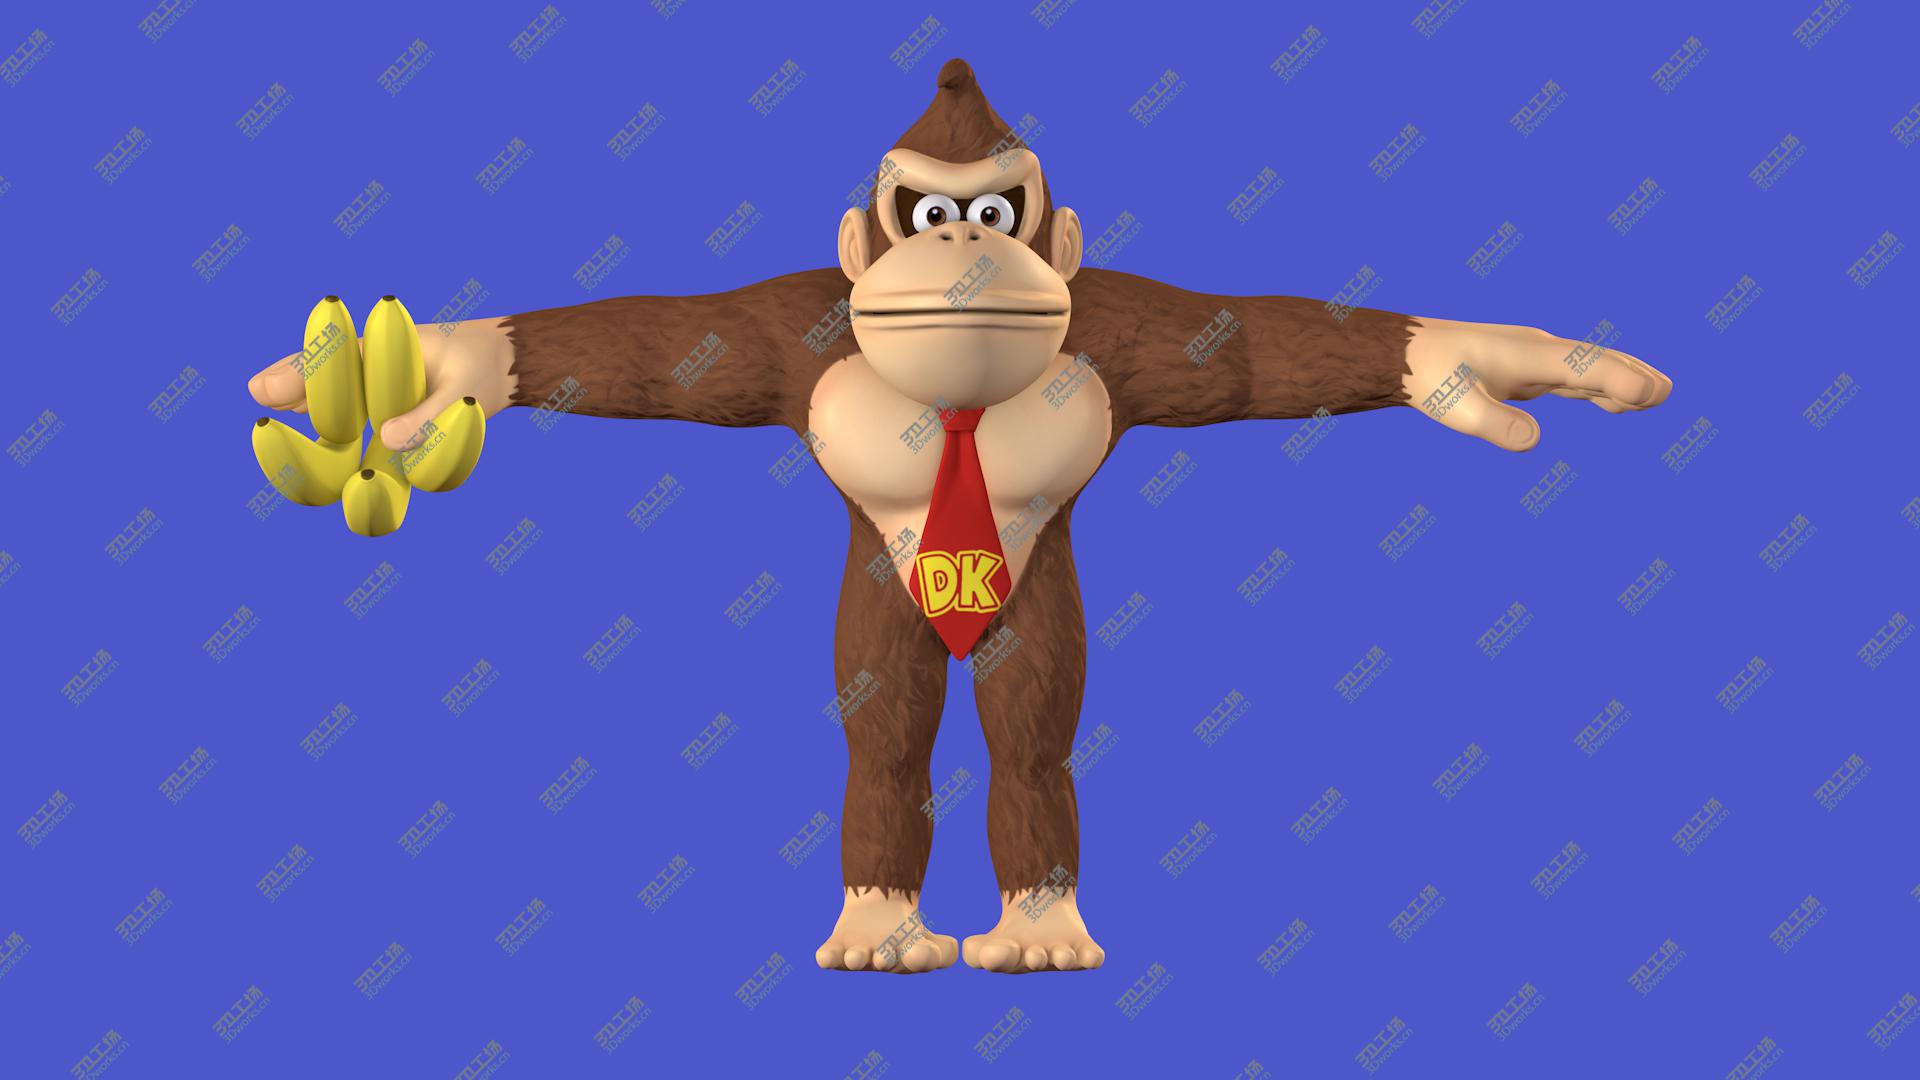 images/goods_img/202105071/3D Donkey Kong Character/2.jpg